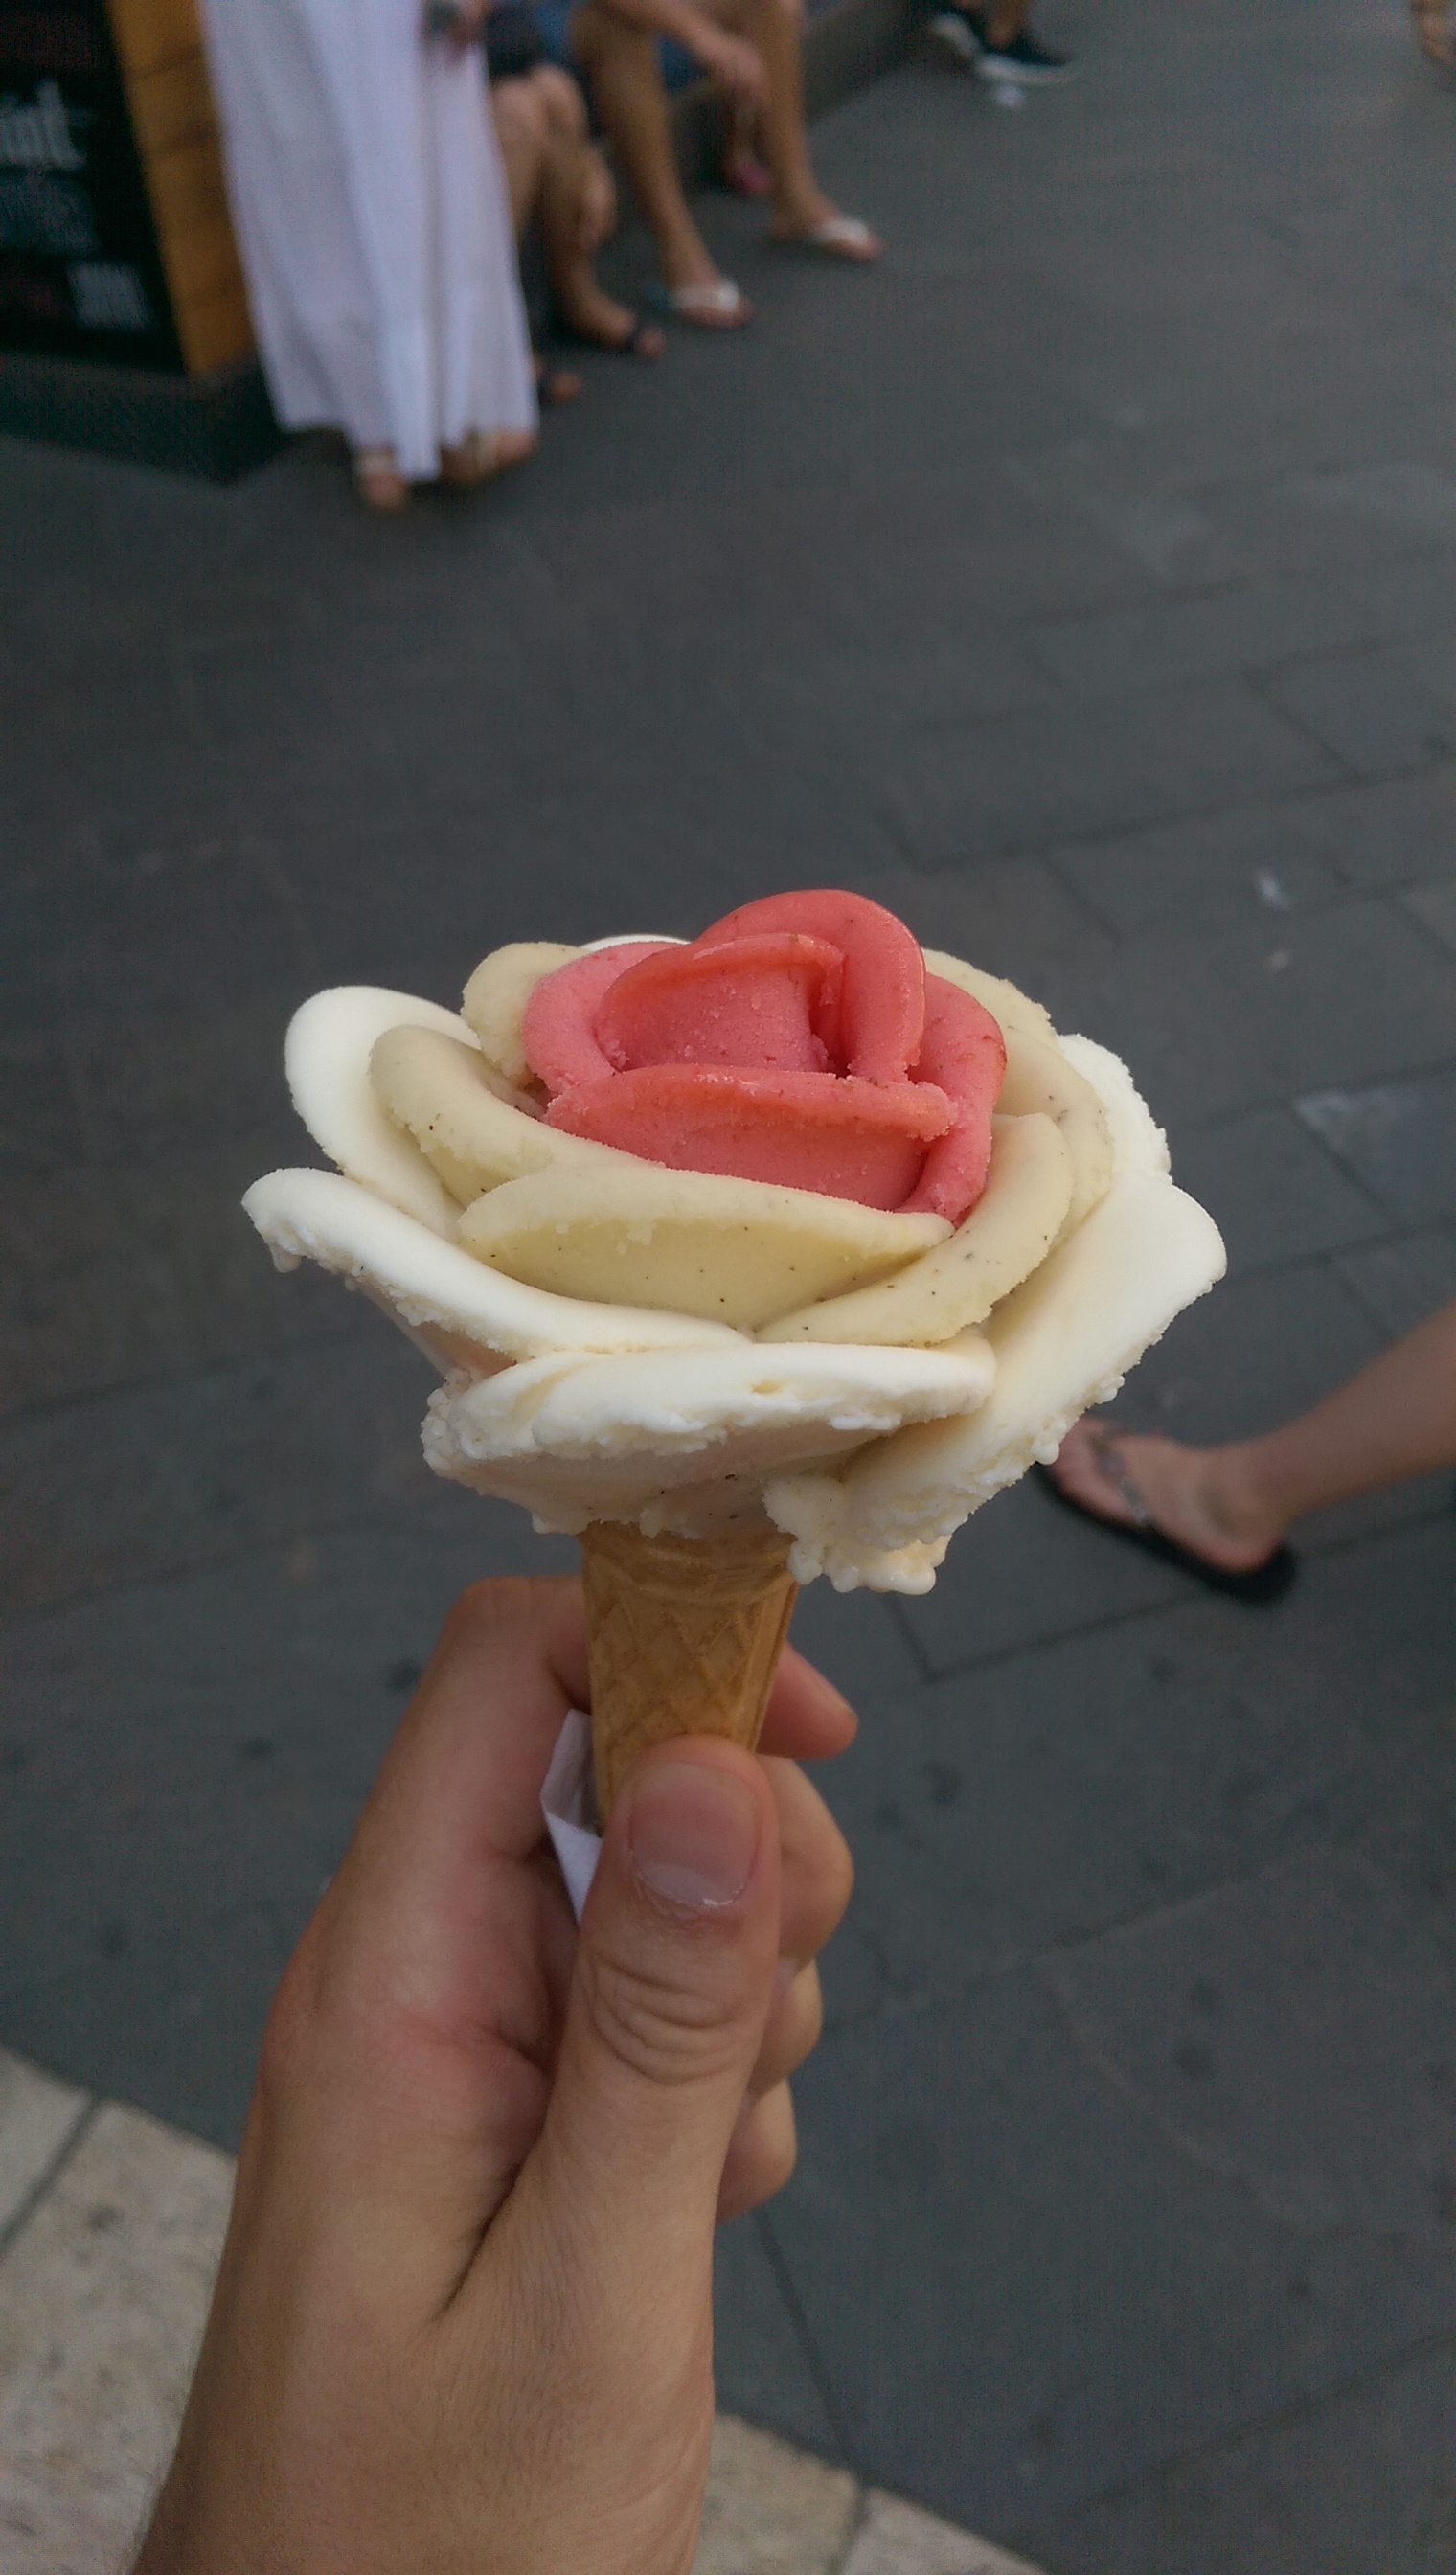 This rose shaped ice cream.